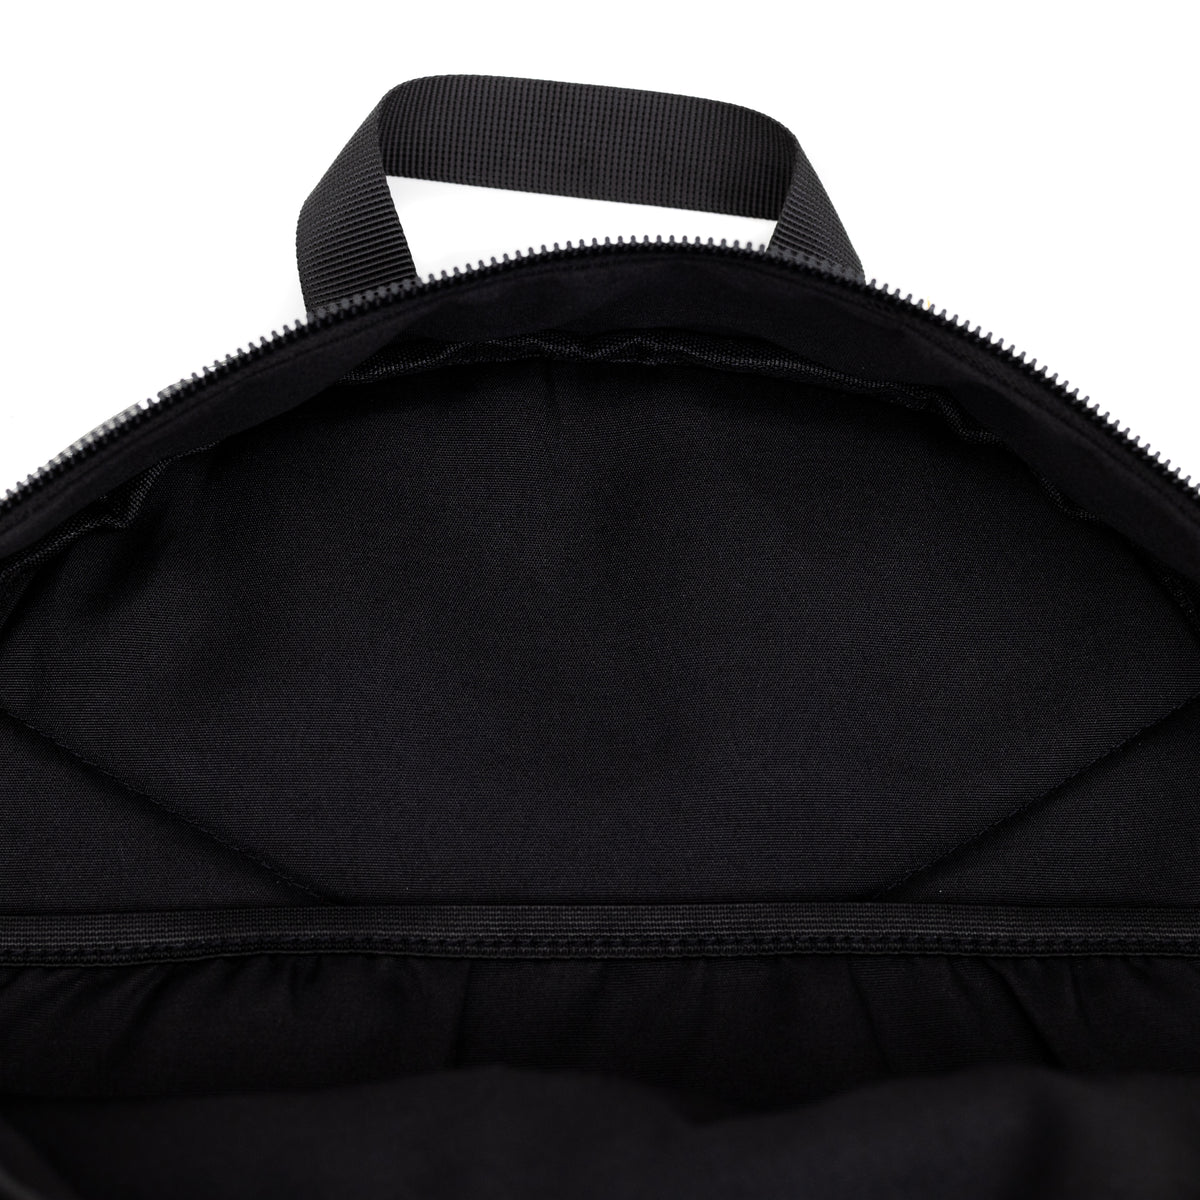 Nightmare Before Christmas Full Size Vegan Leather Backpack